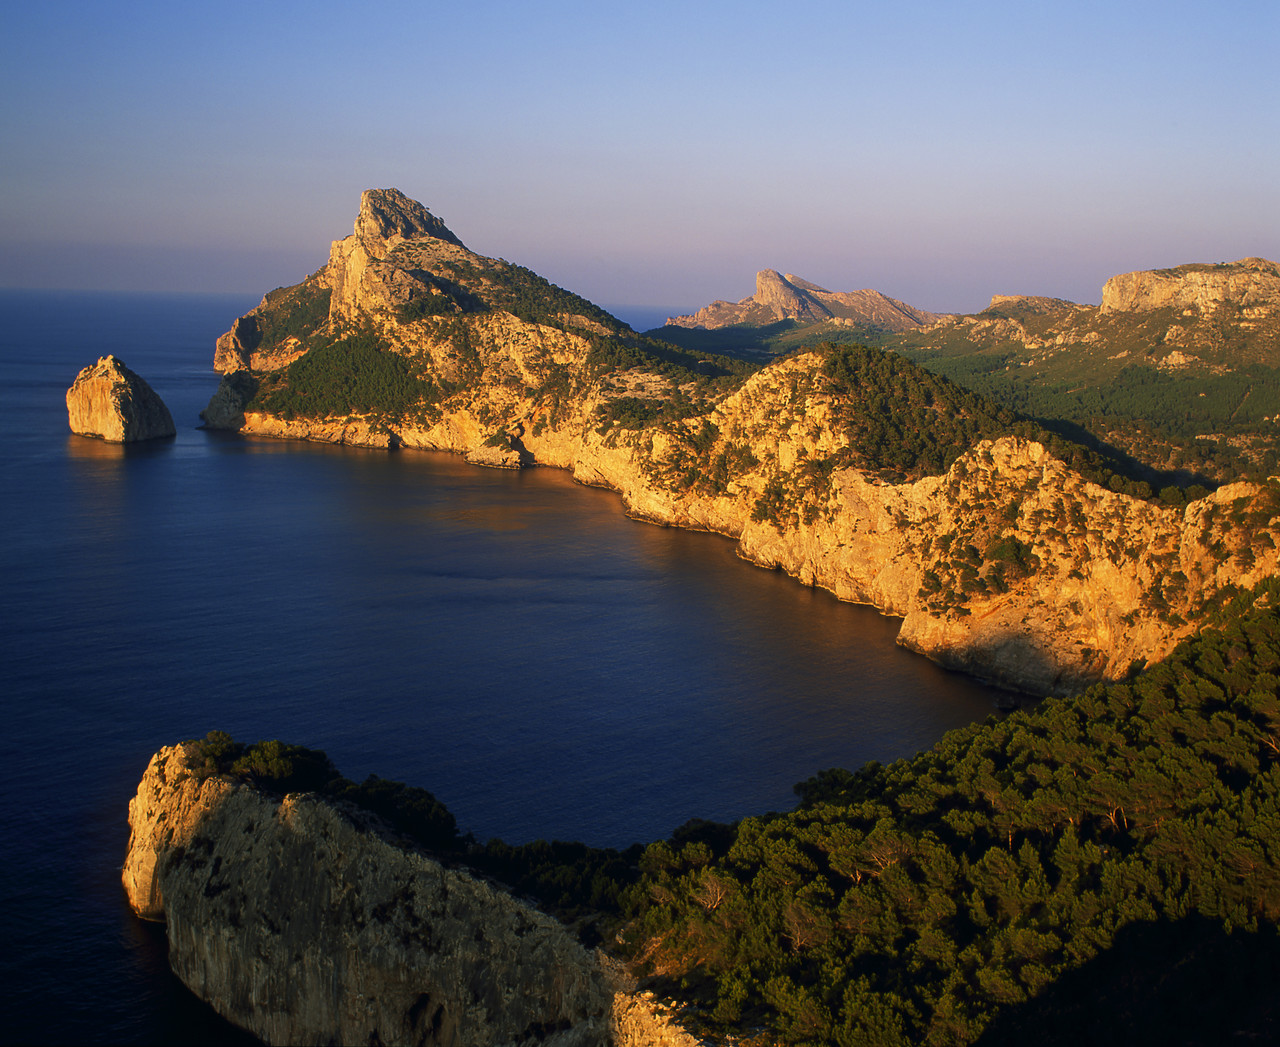 #050243-1 - Afternoon Light on Formentor Coastline, Mallorca, Spain